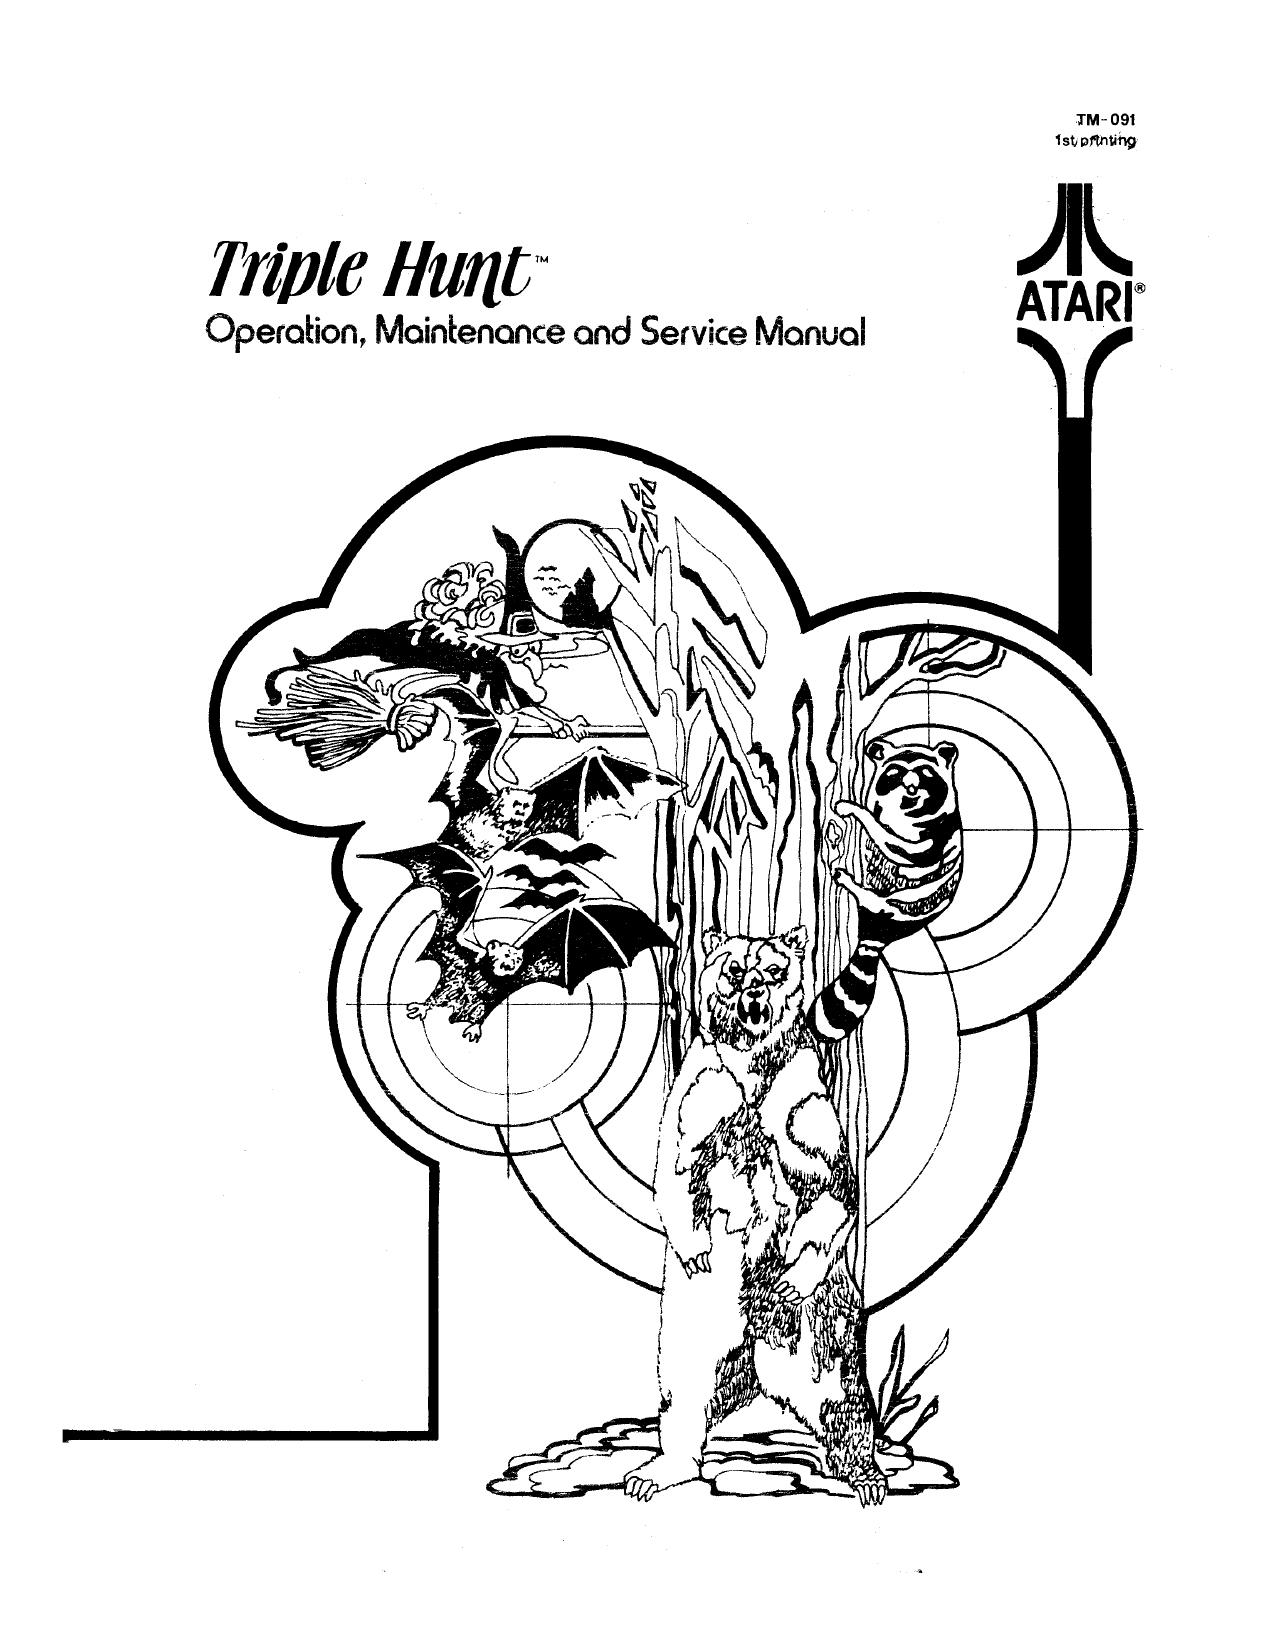 Triple Hunt TM-091 1st Printing